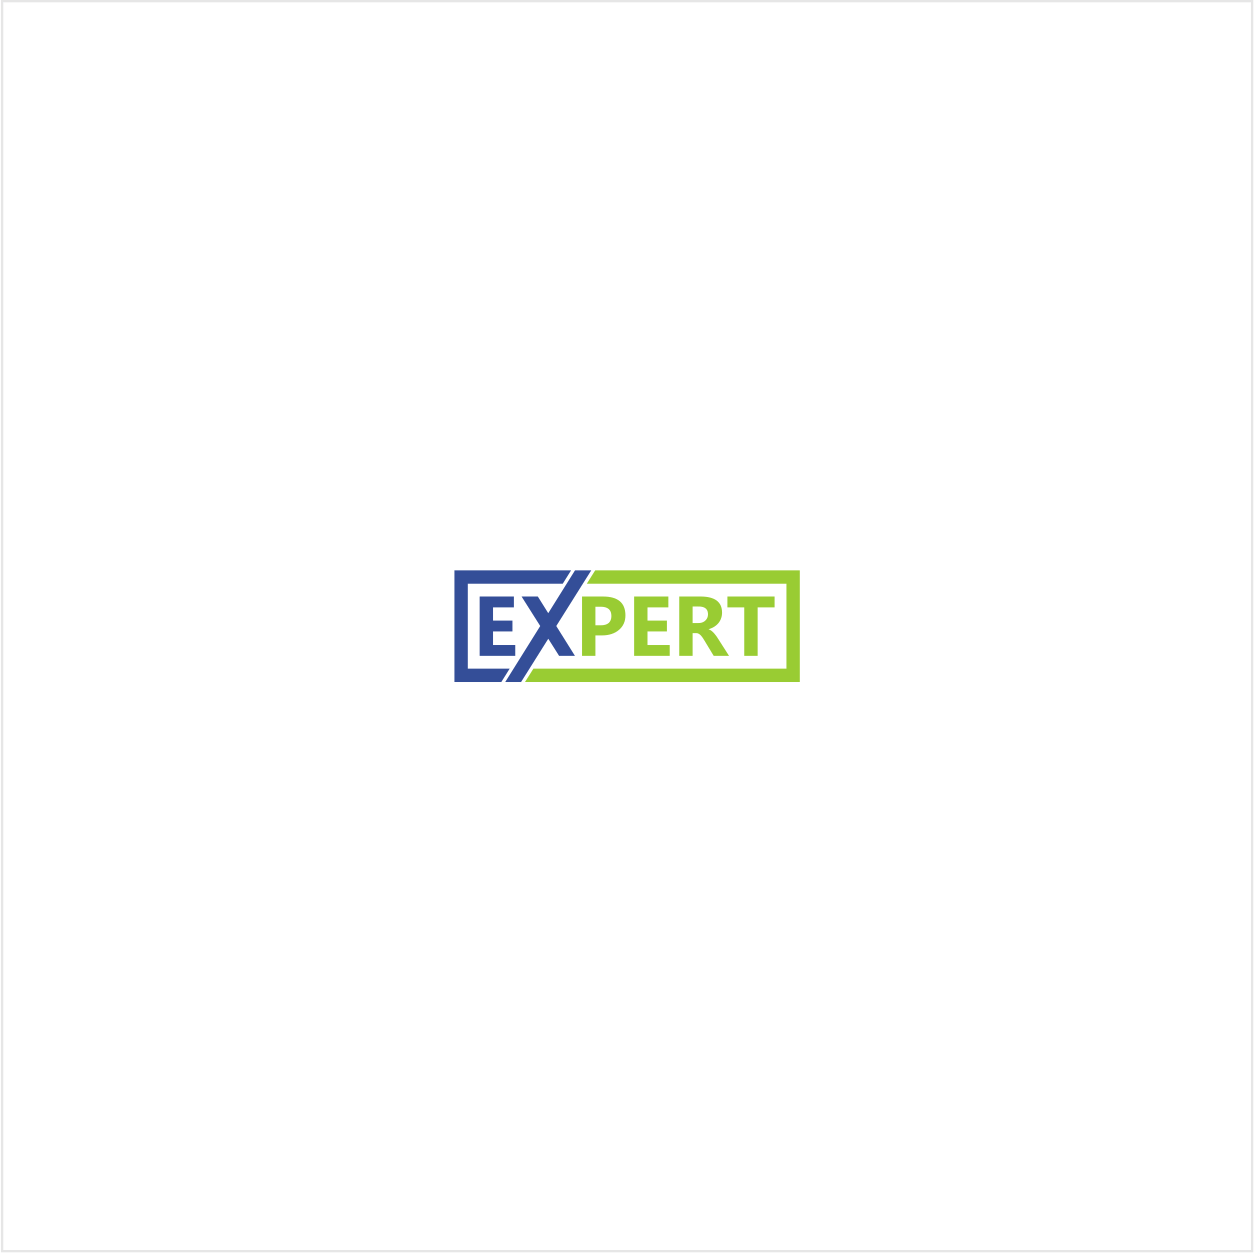 Expert Logo - Professional, Modern, It Company Logo Design for Expert by Bulan ...